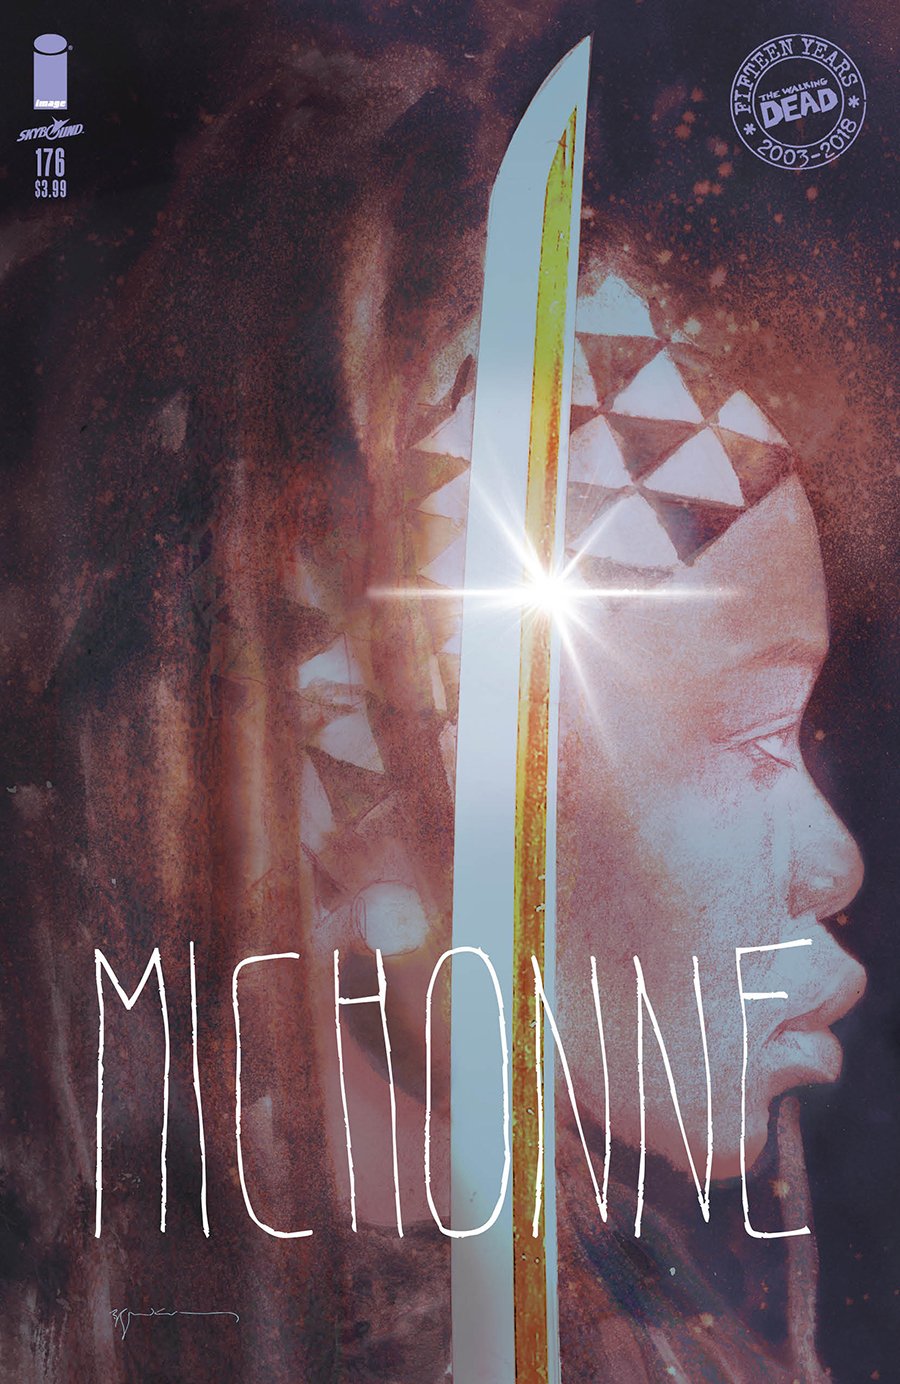 La variant cover del volume 176 di The Walking Dead dedicata a Michonne